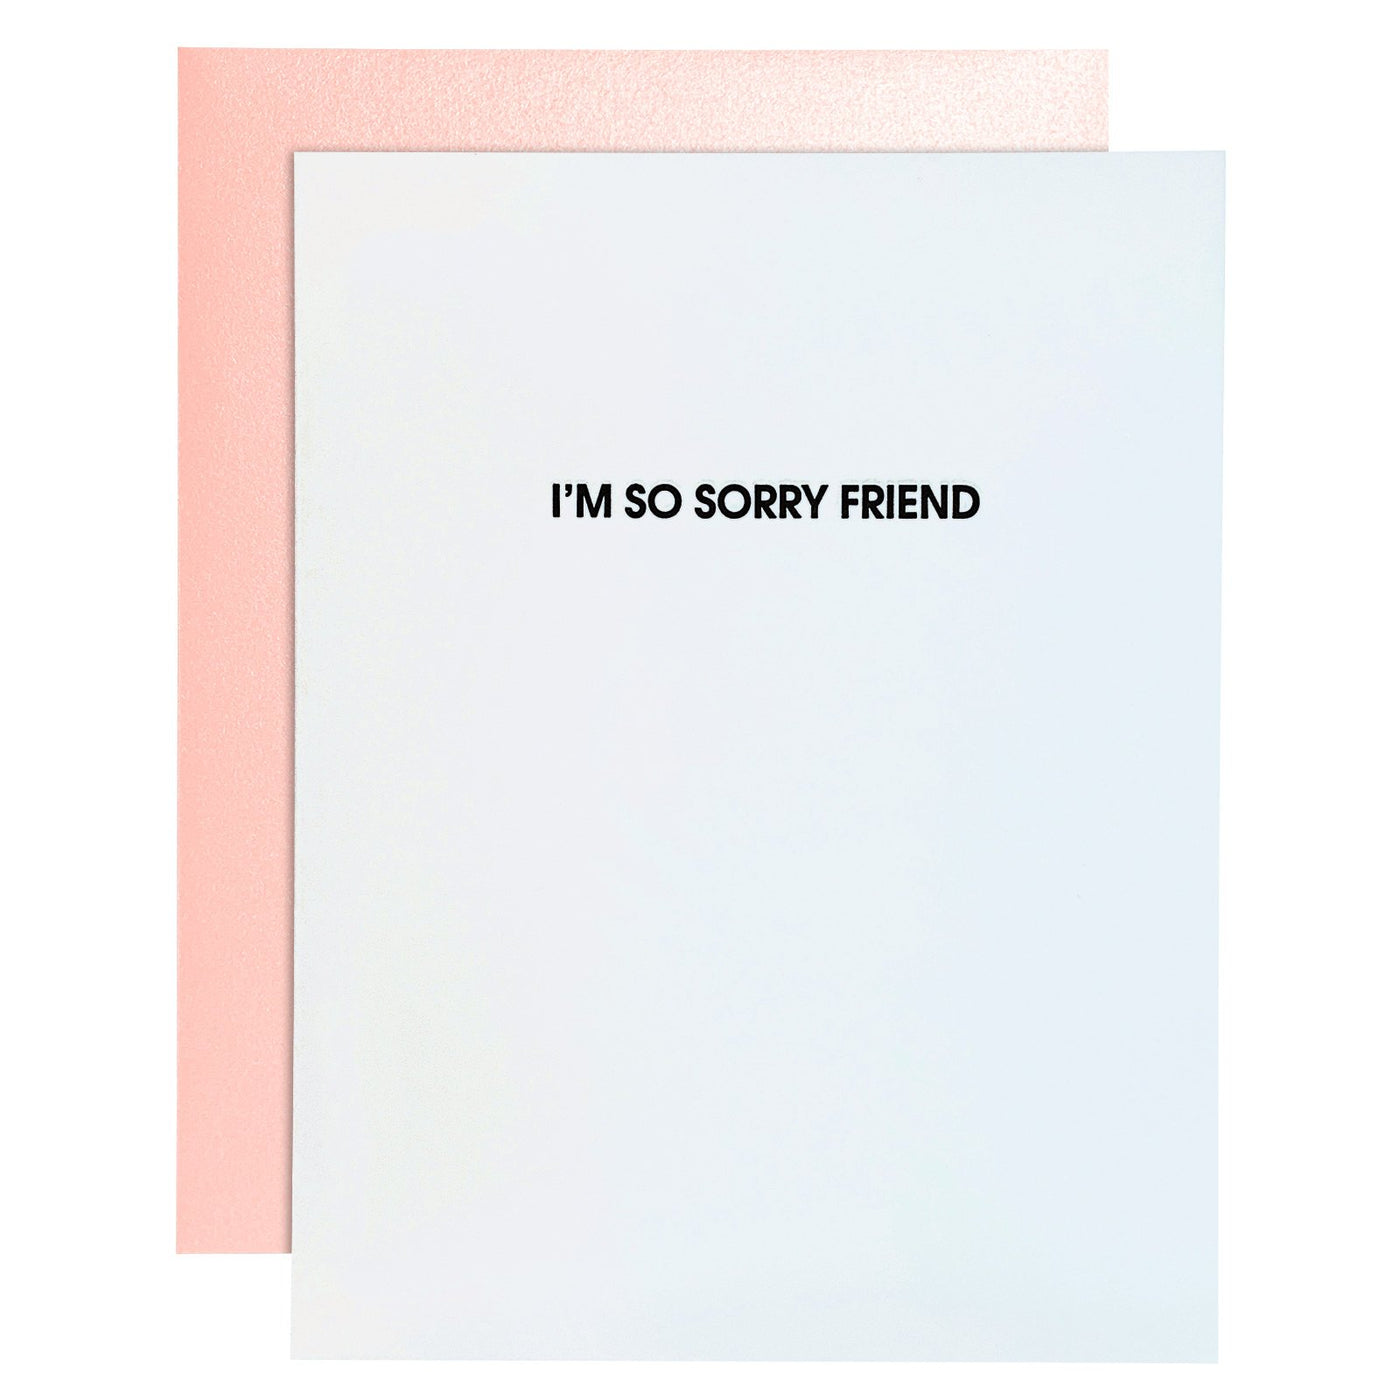 CARD LETTERPRESS "I'M SO SORRY FRIEND"